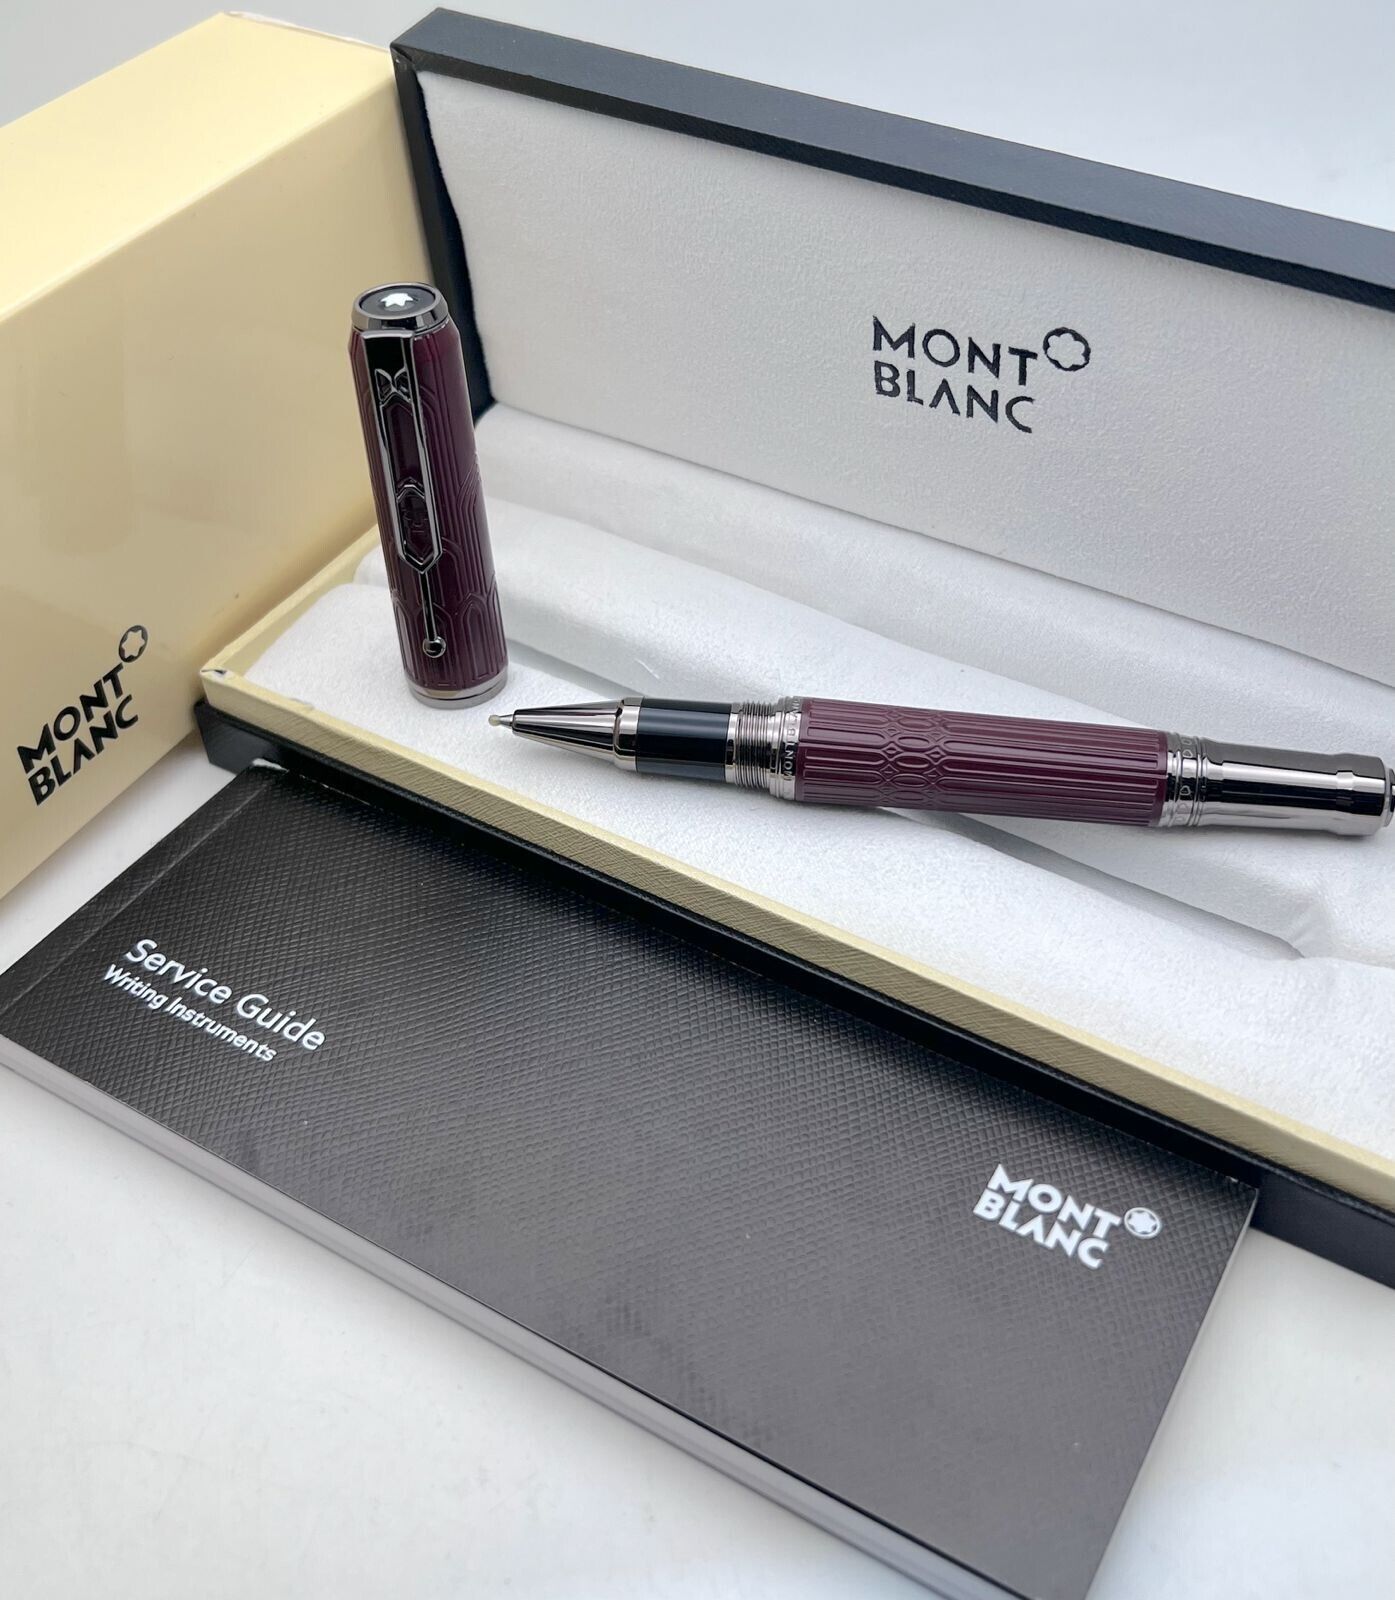 MONTBLANC Victor Hugo Limited Edition Pen Classic Collectable Pen Premium Pen